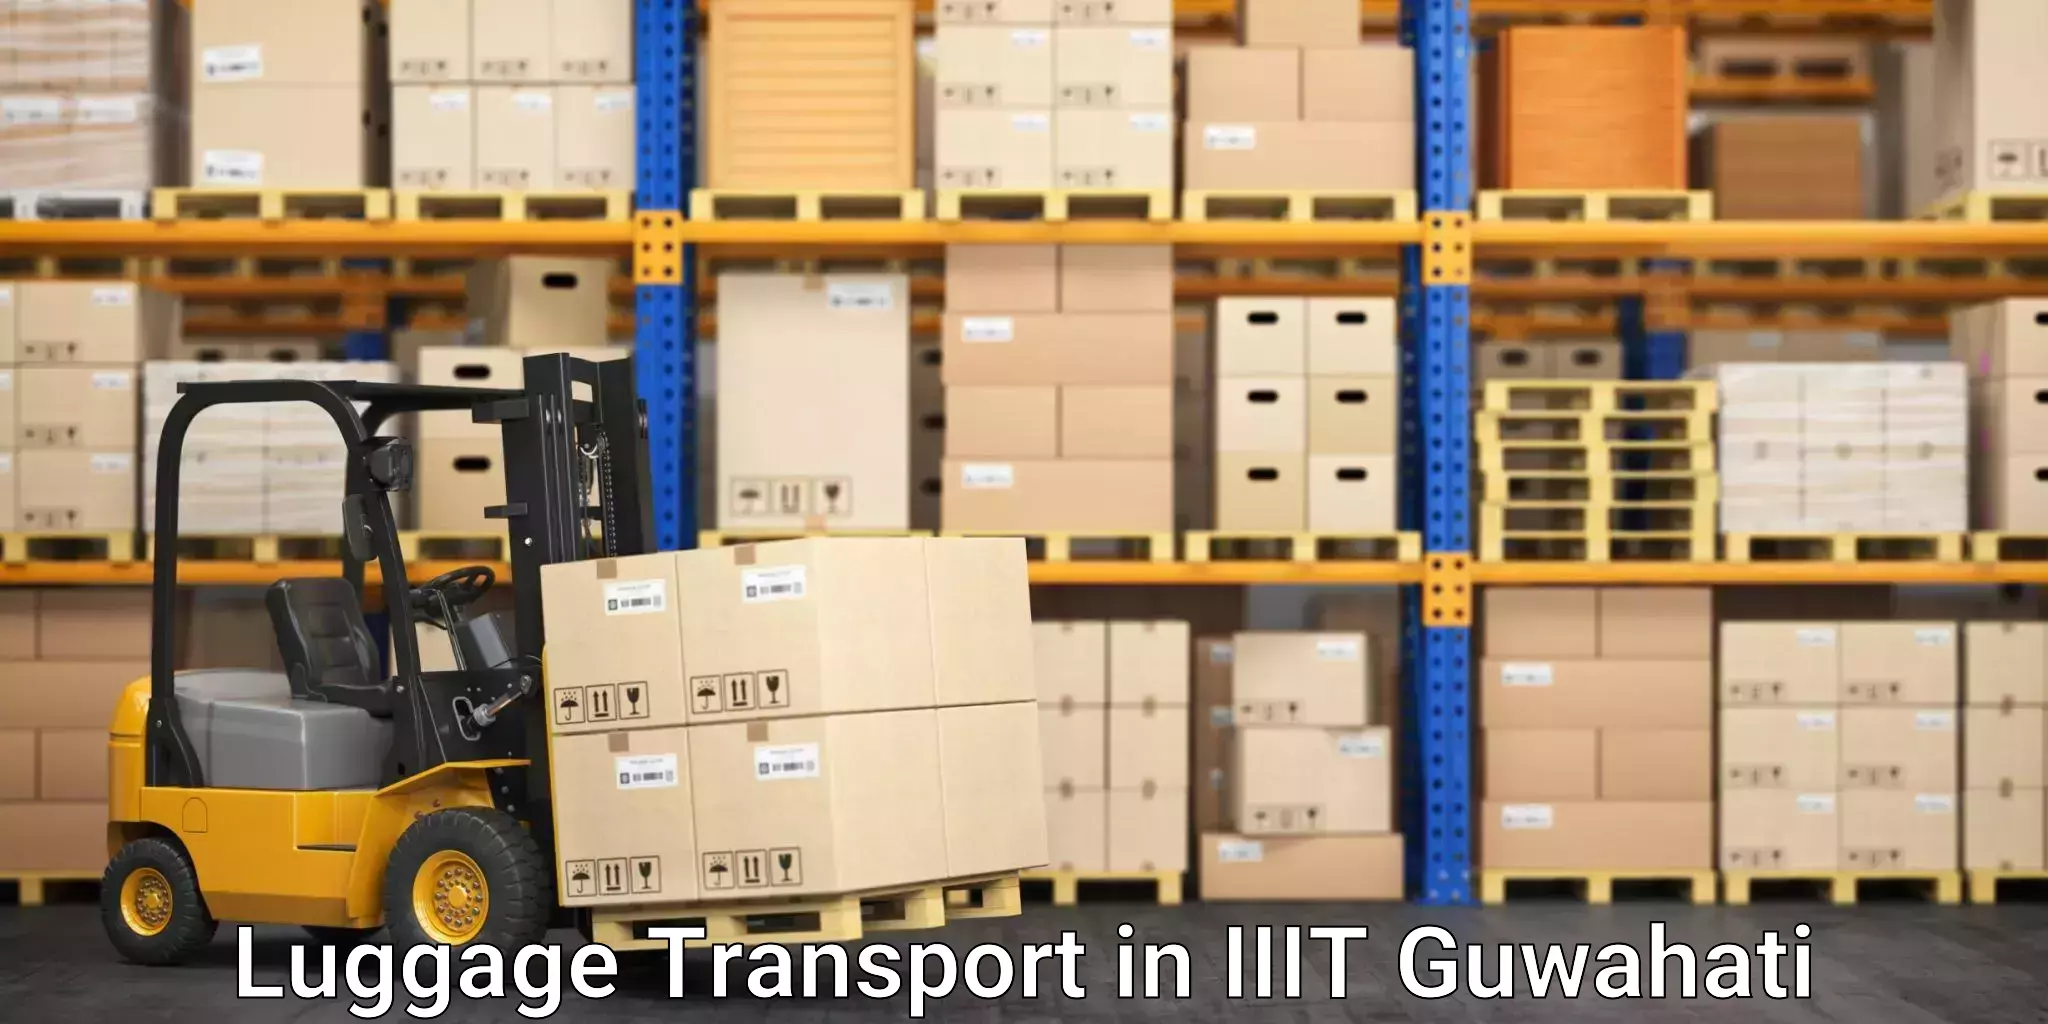 Regional luggage transport in IIIT Guwahati